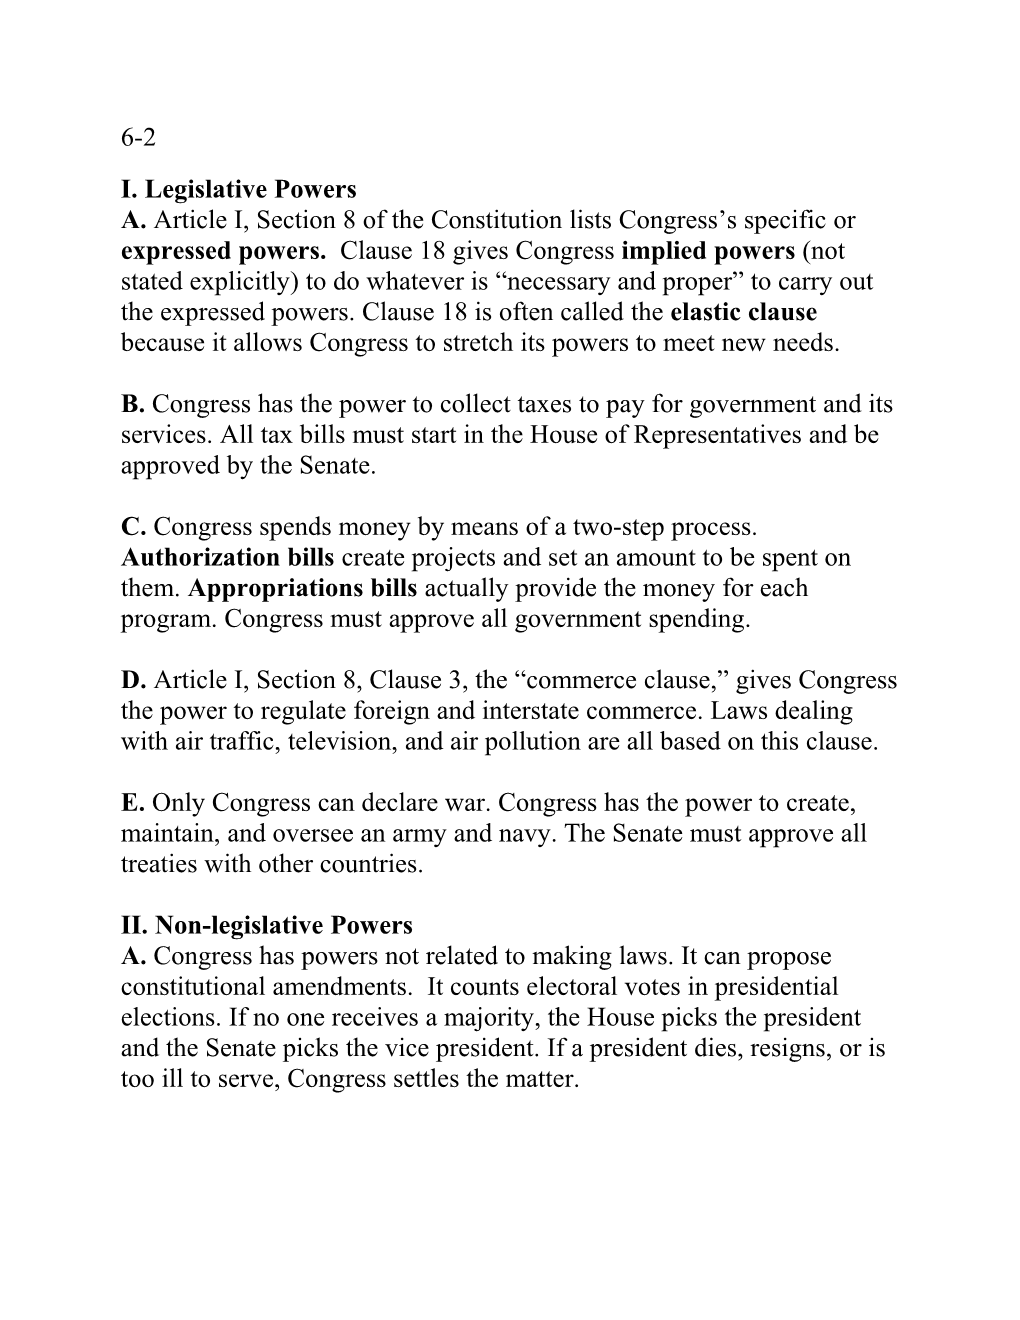 I. Legislative Powers